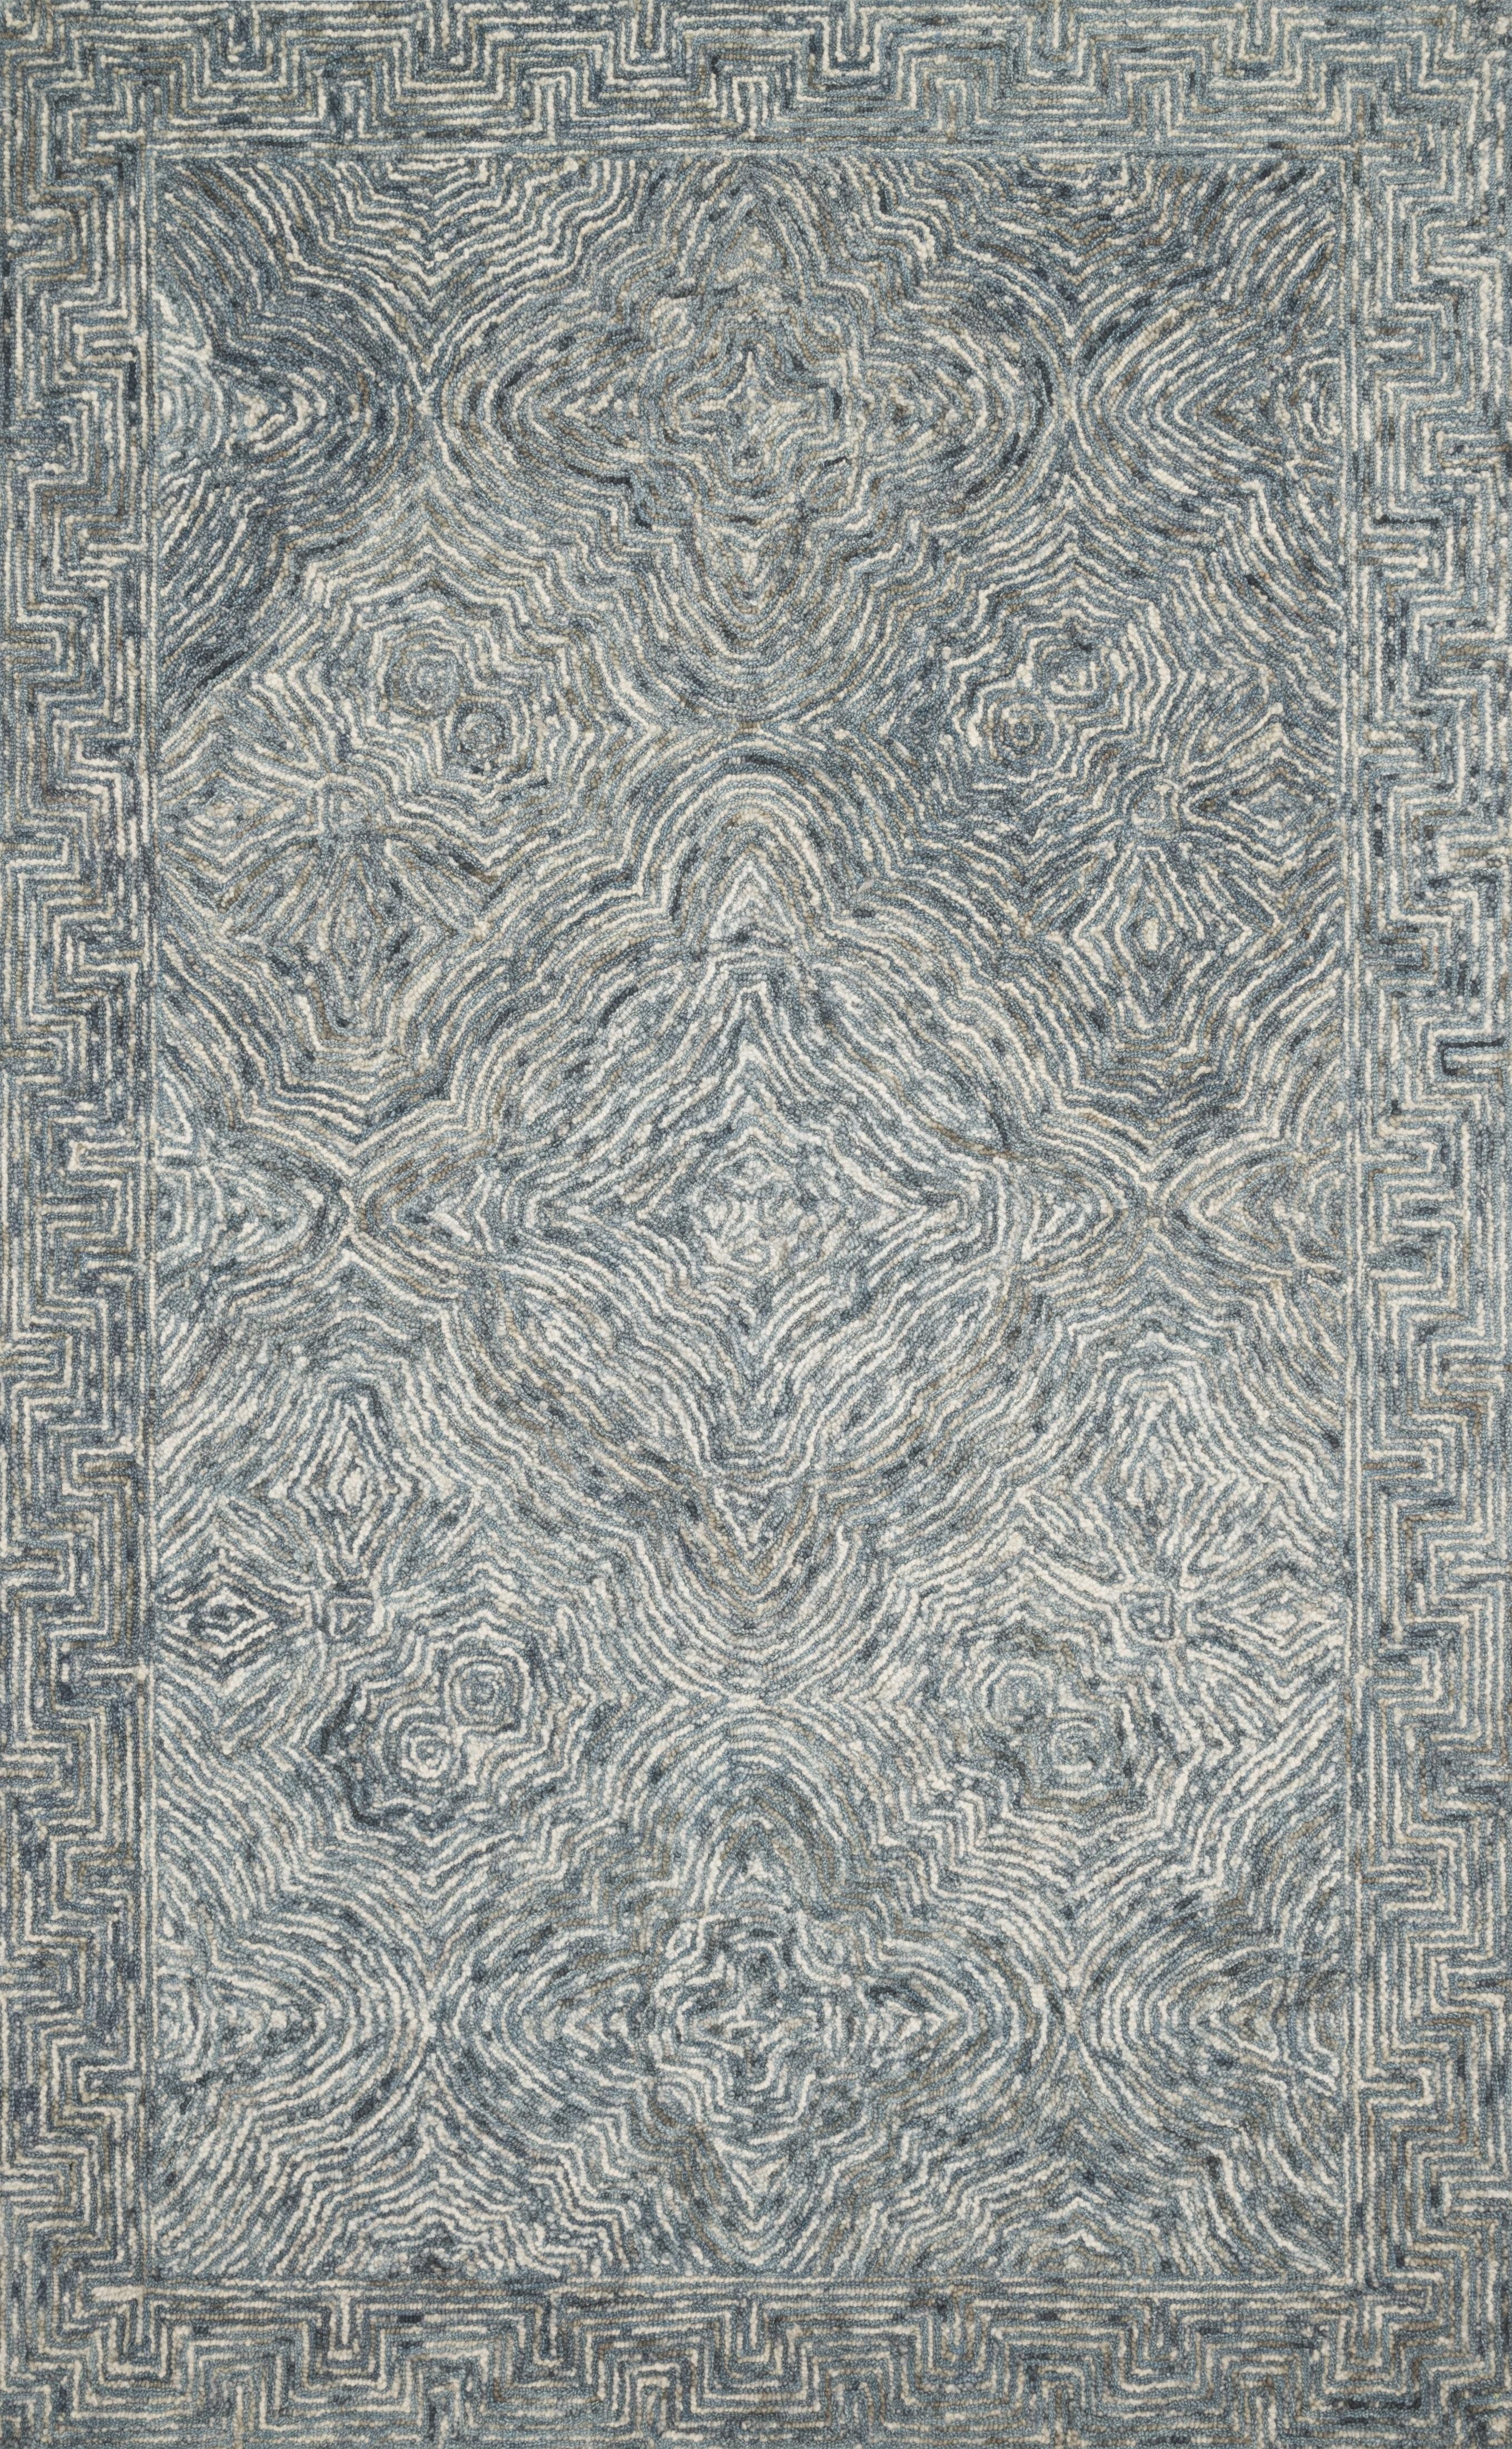 Handmade Blue Wool Tufted Rectangular Area Rug 117" x 93"